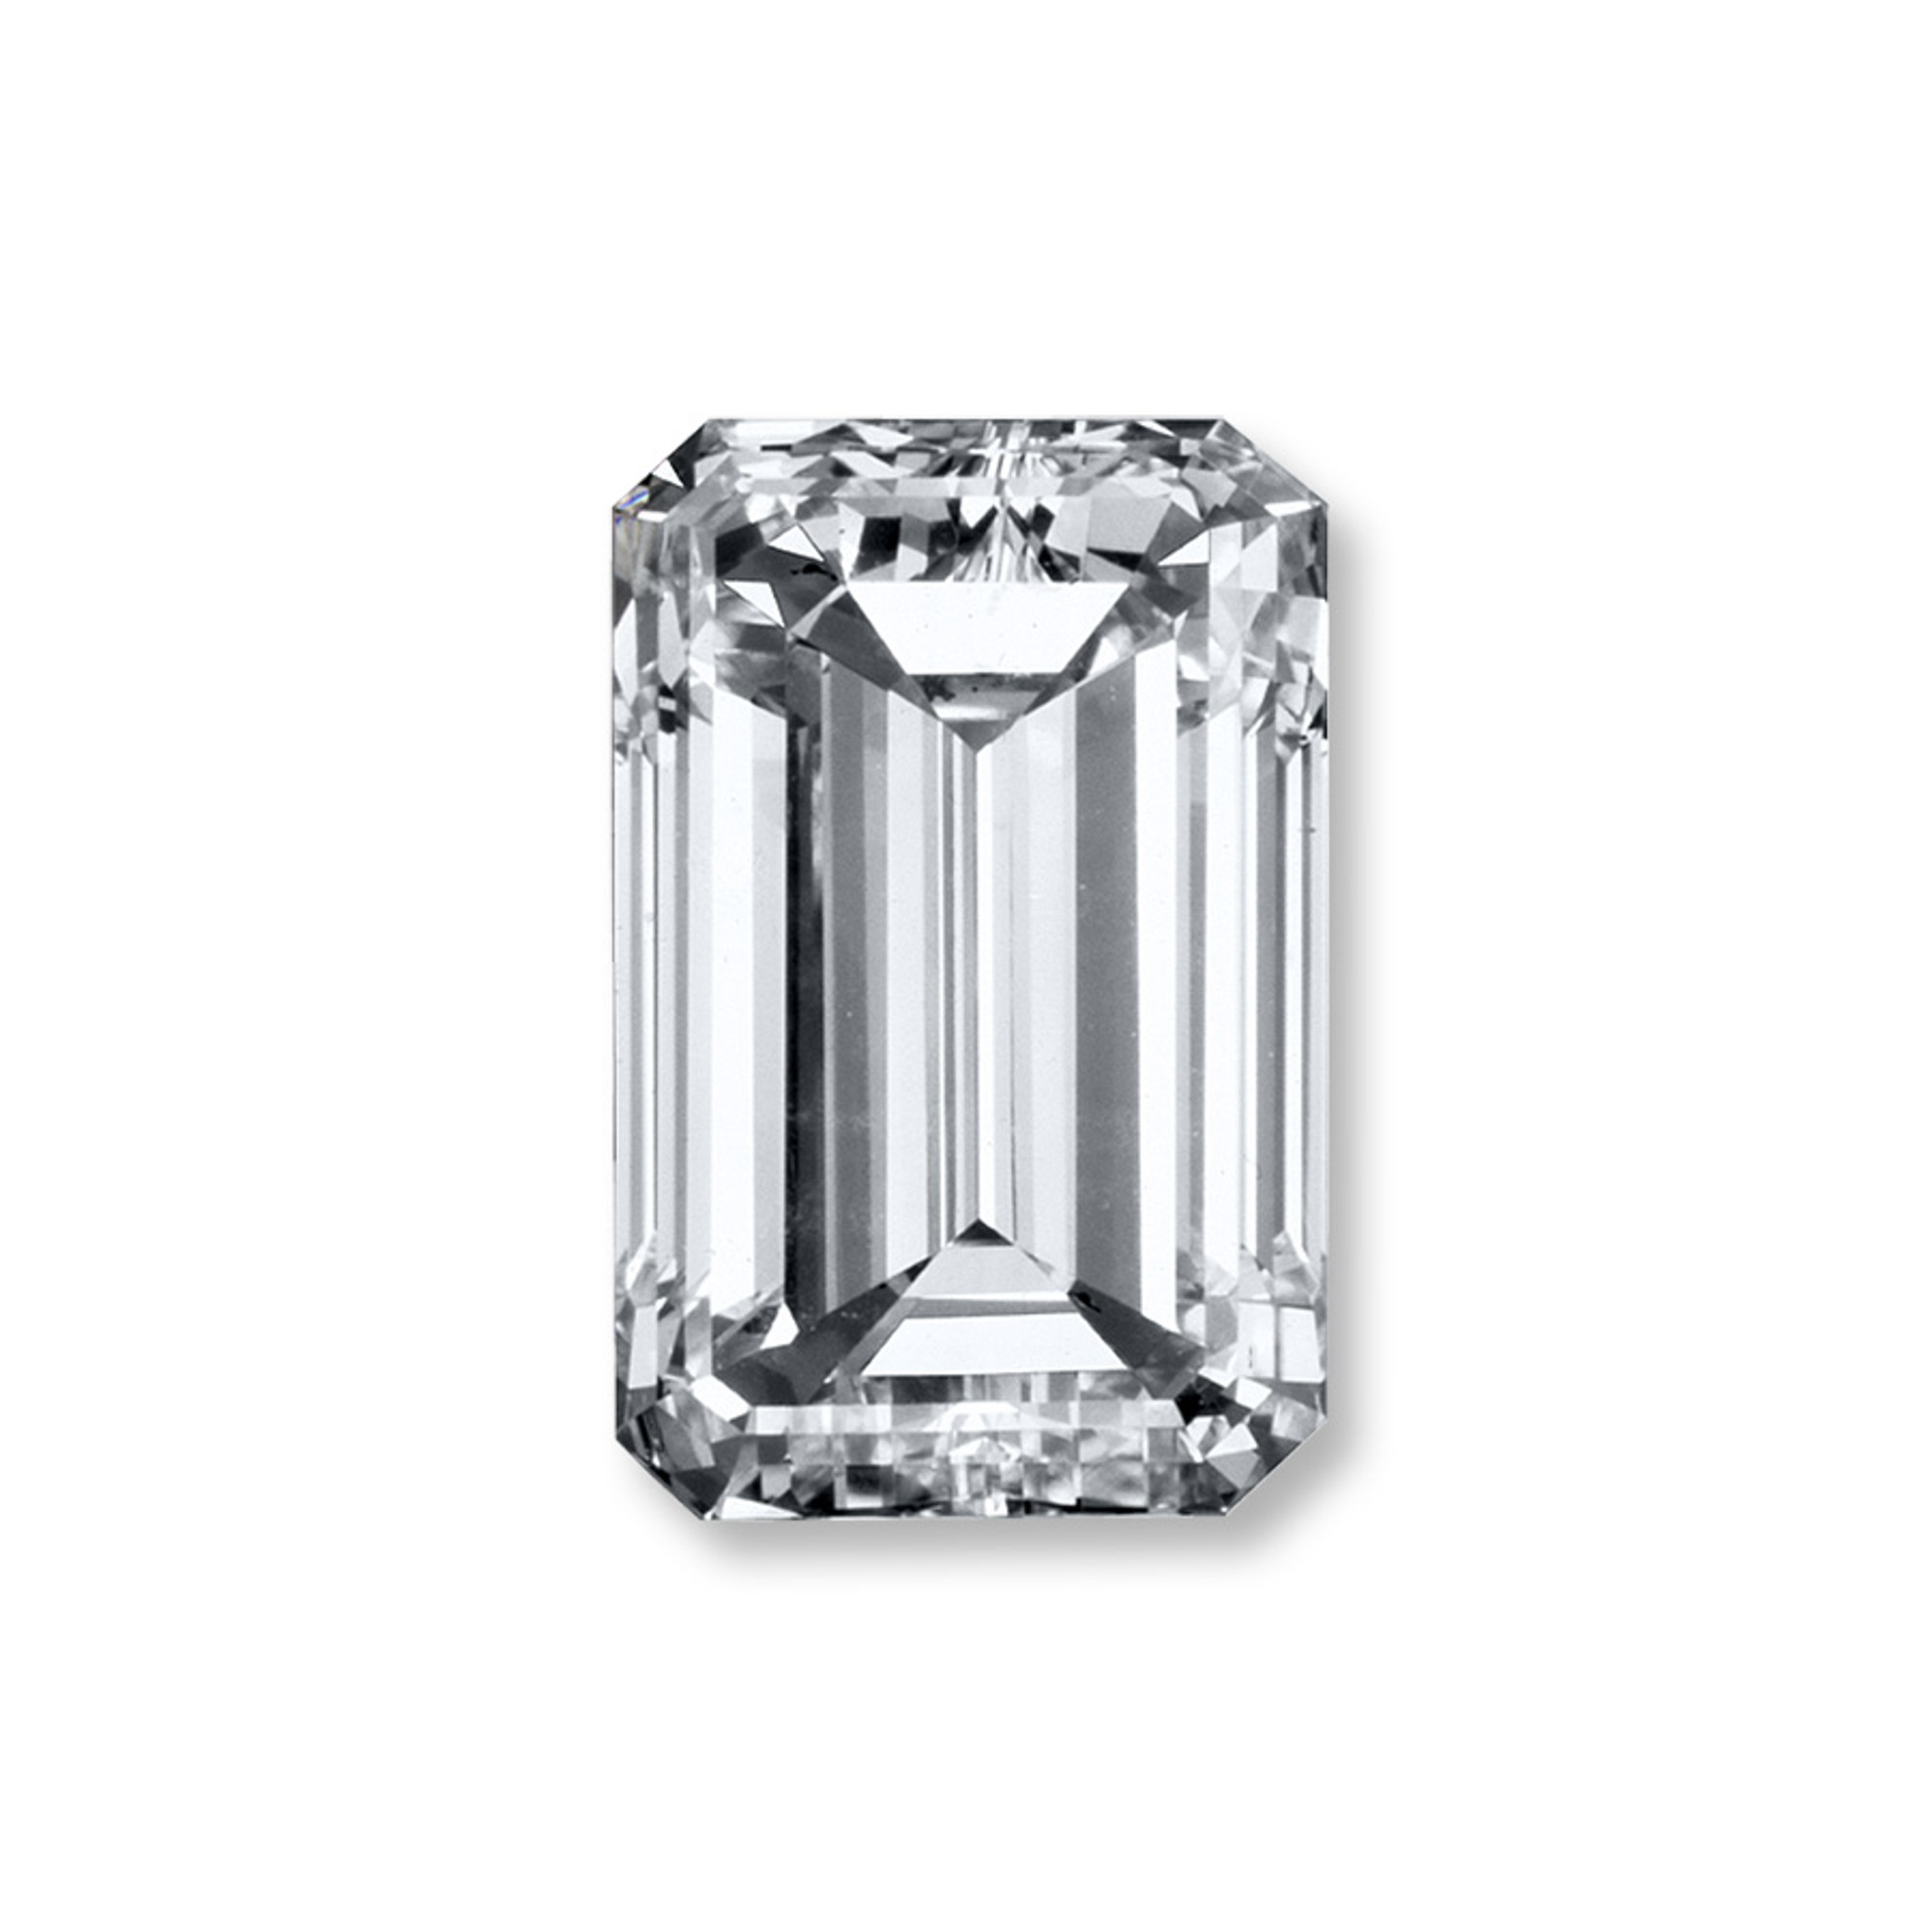 1.56ct Emerald Cut Diamond, I color, SI2 clarity - GIA